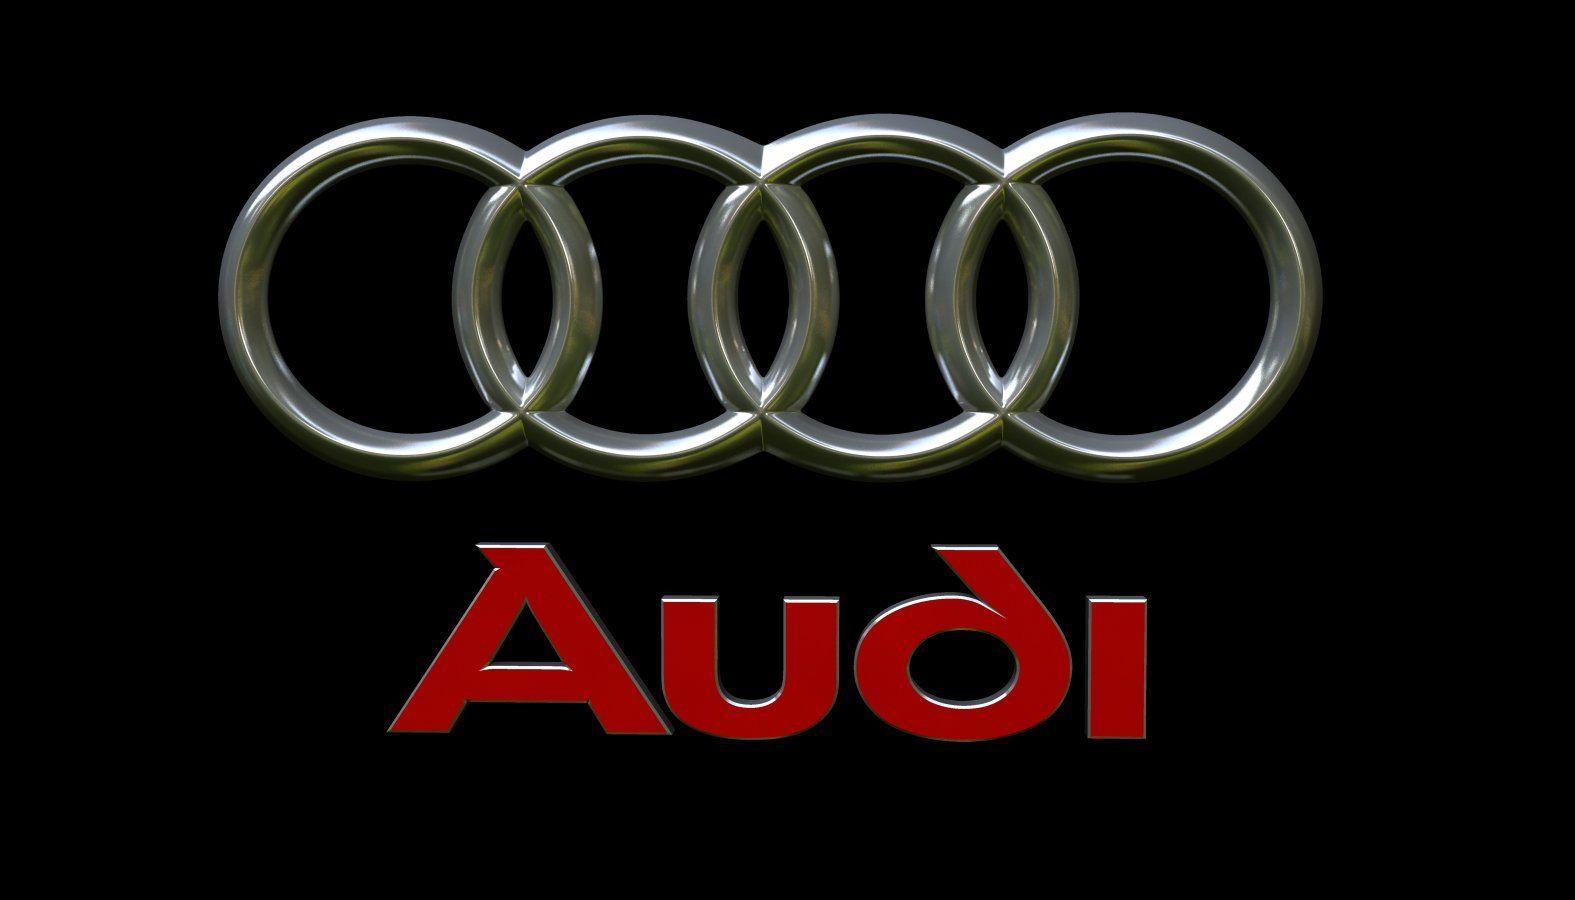 Audi Logo Wallpapers - Wallpaper Cave Audi Logo Black Background.